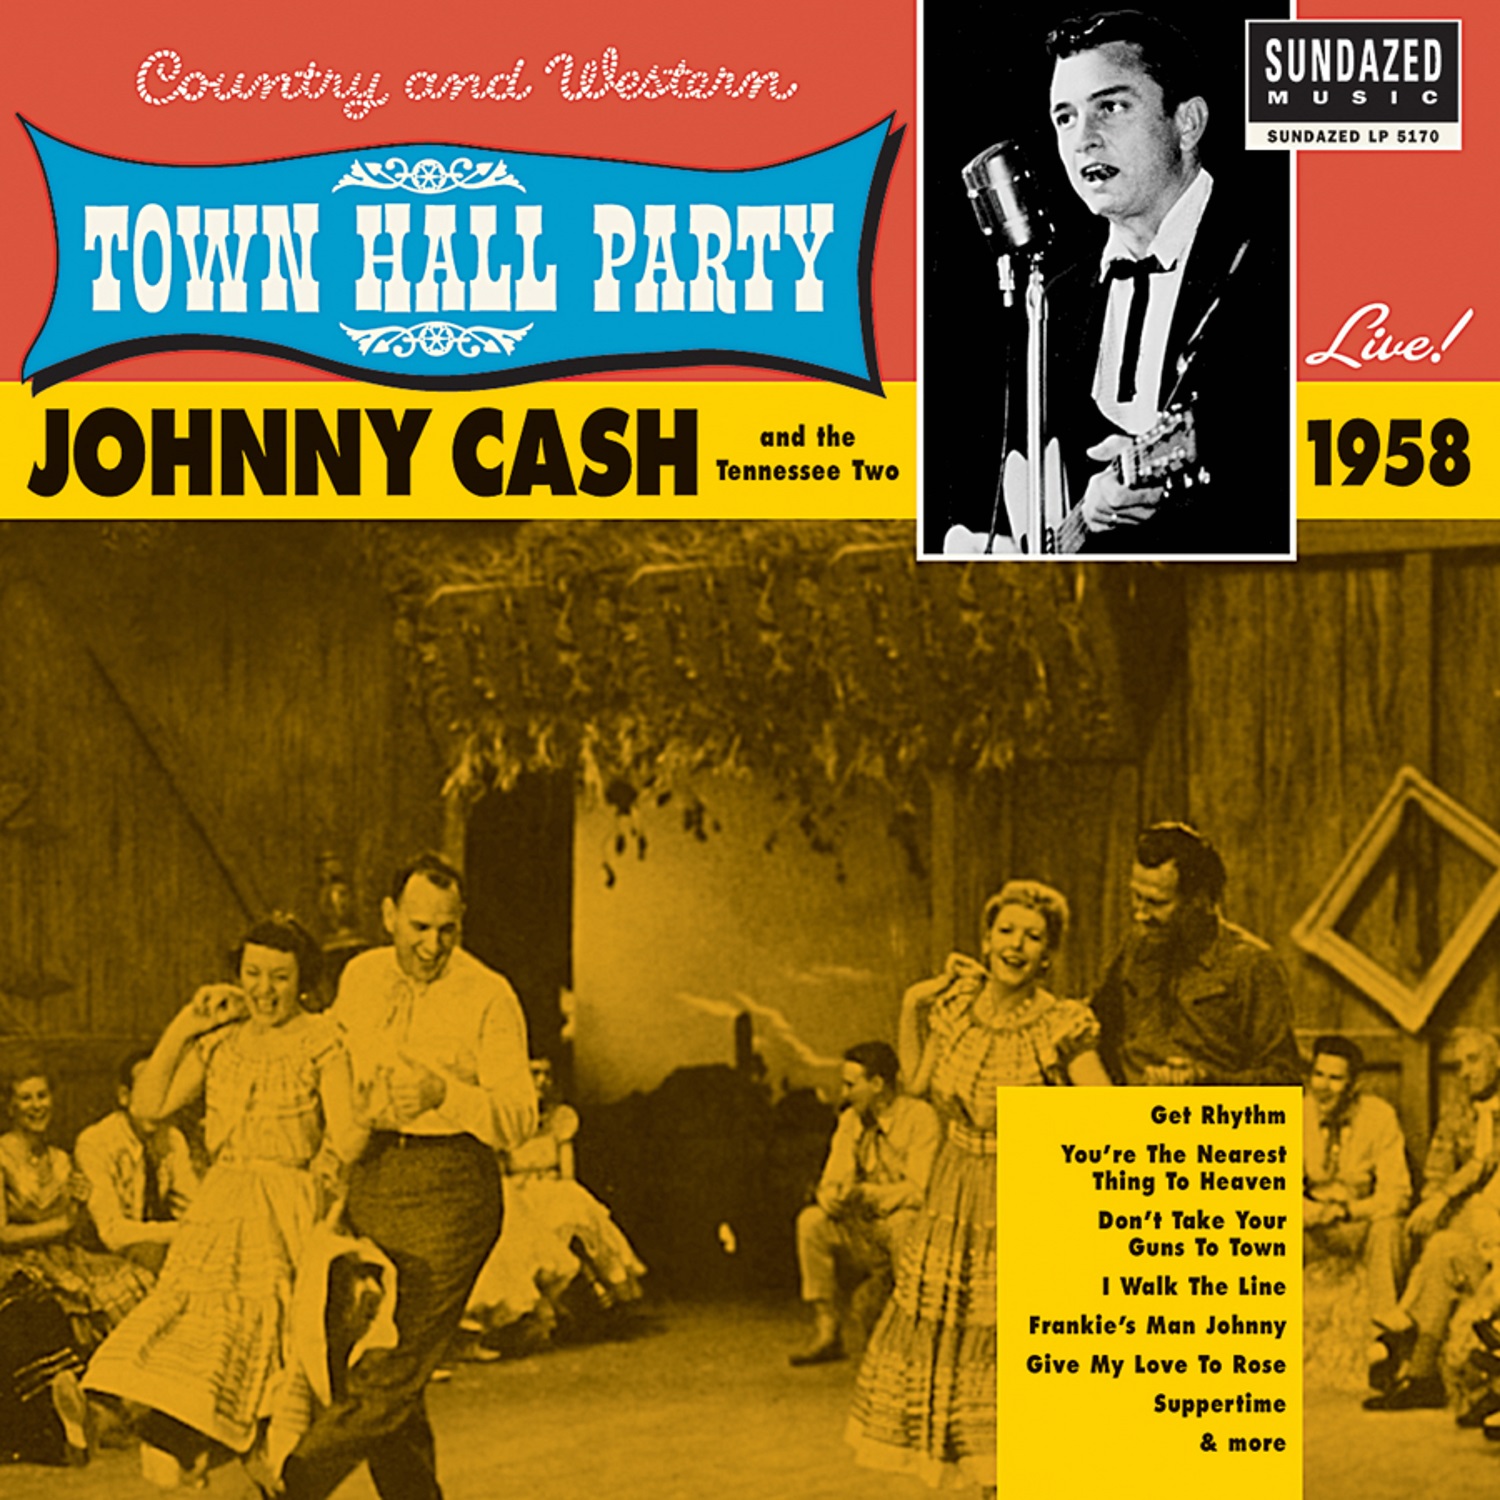 Cash, Johnny - Johnny Cash Live At Town Hall Party 1958! LP - LP 5170